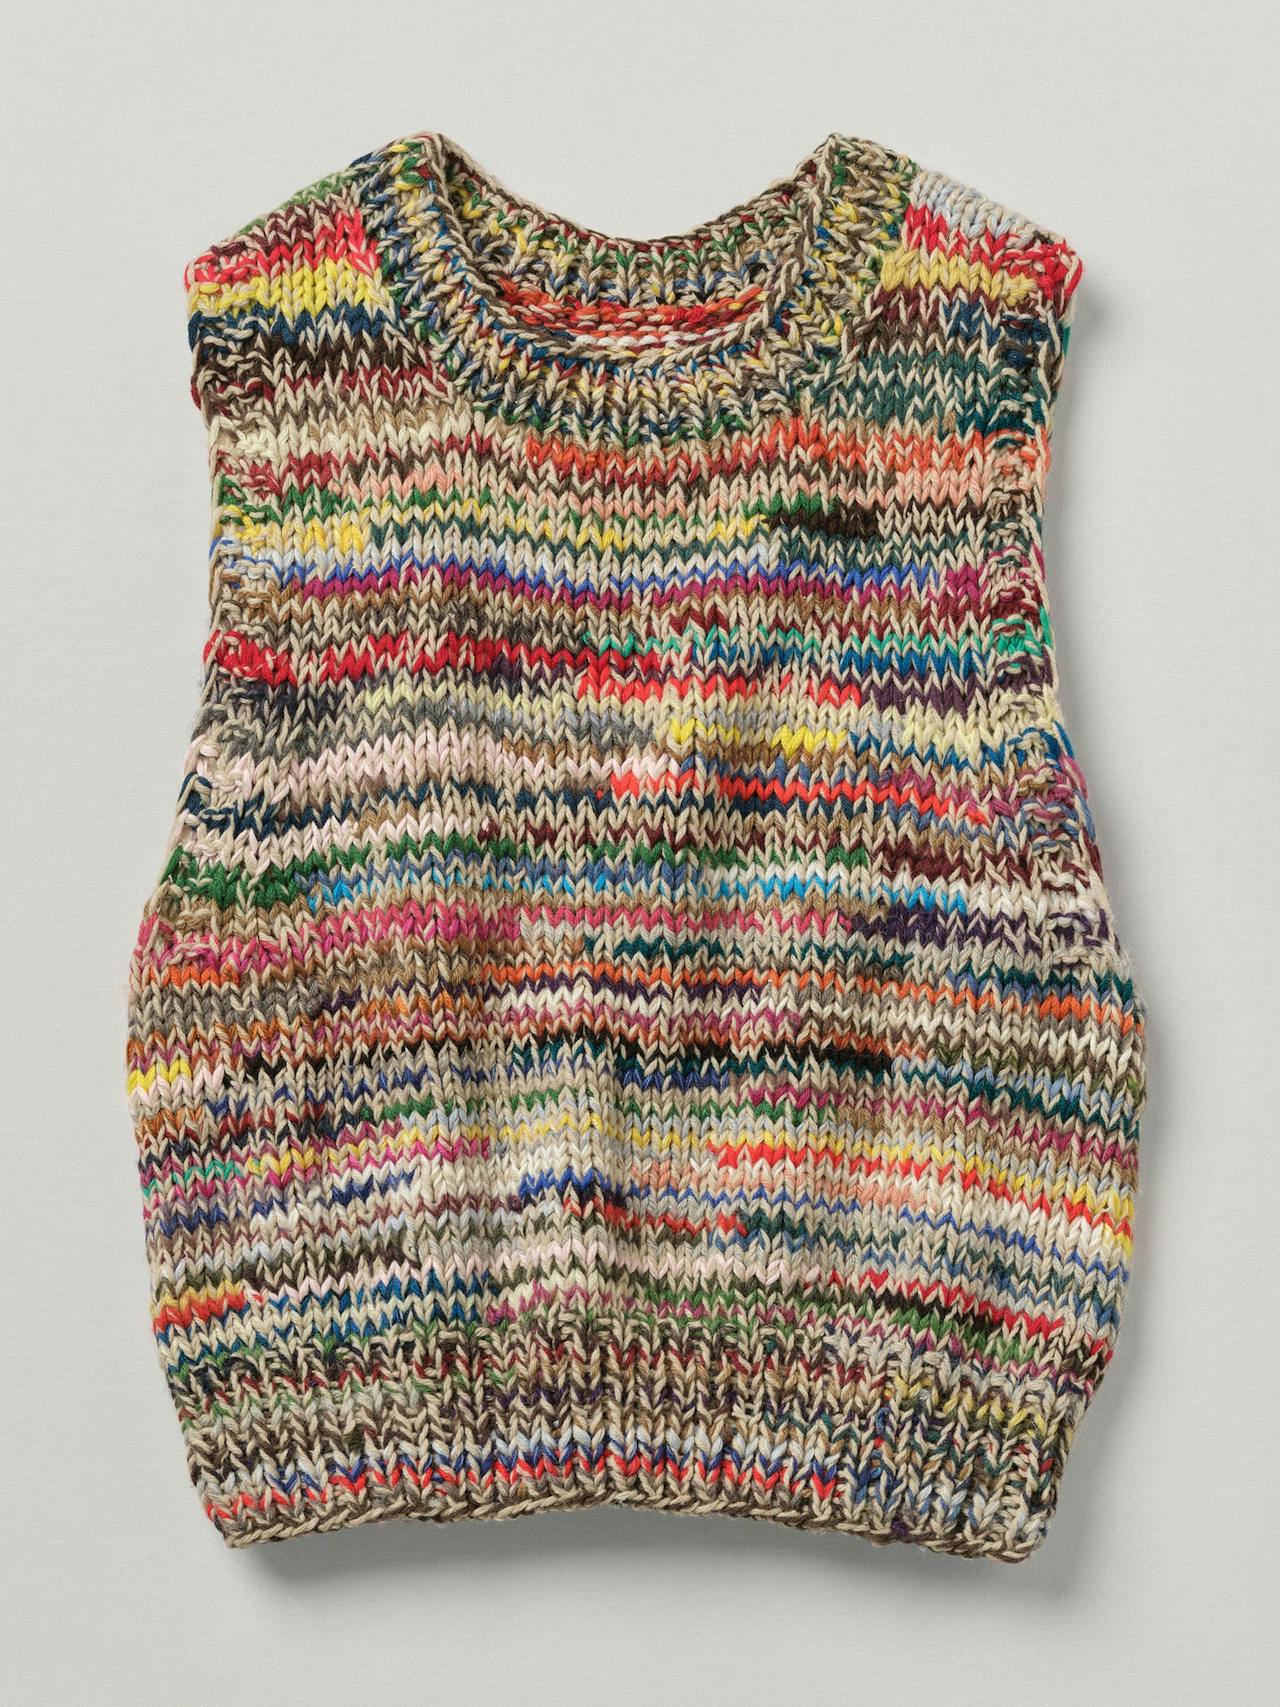 Multi-coloured knit vest